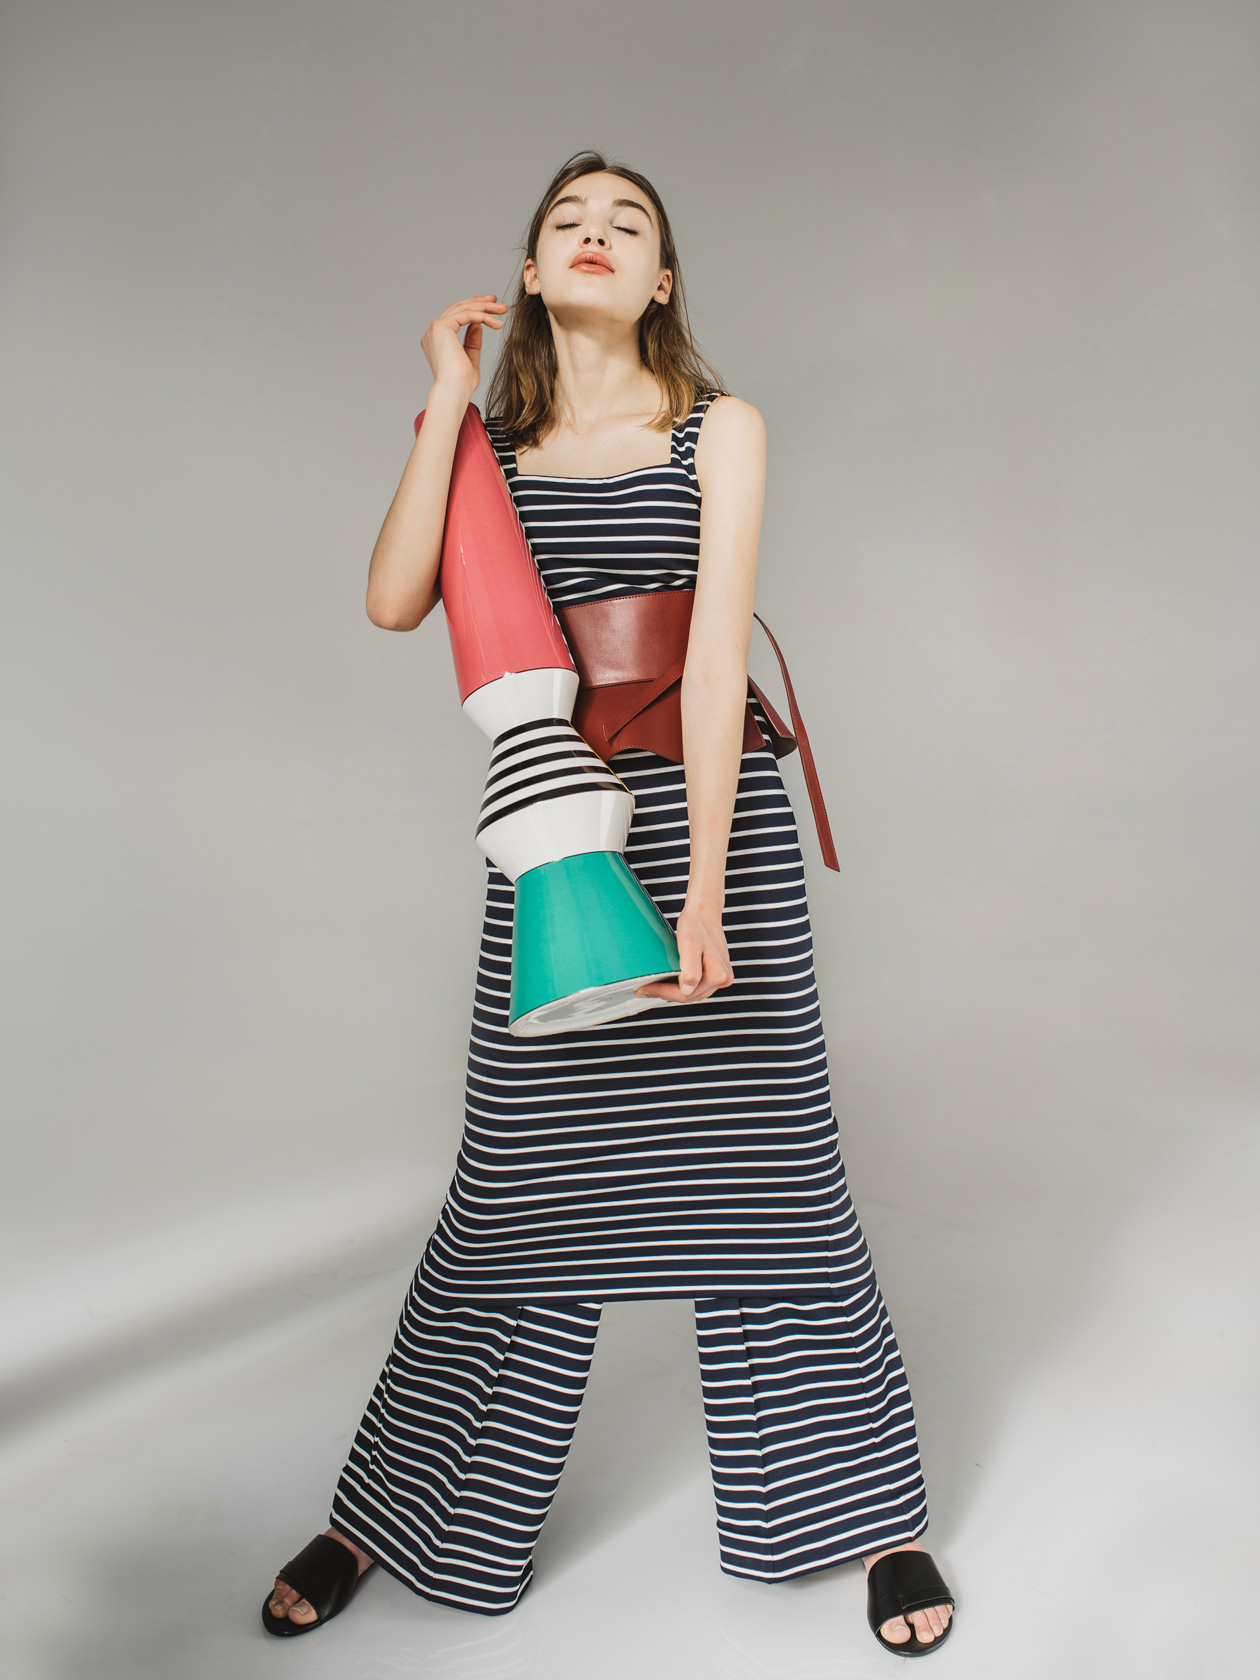 рокля  и панталон Max Mara Studio, чехли H&M, колан Parfois, ваза Byfly TRAPEZE CIRCUS VASE от Elegant Living